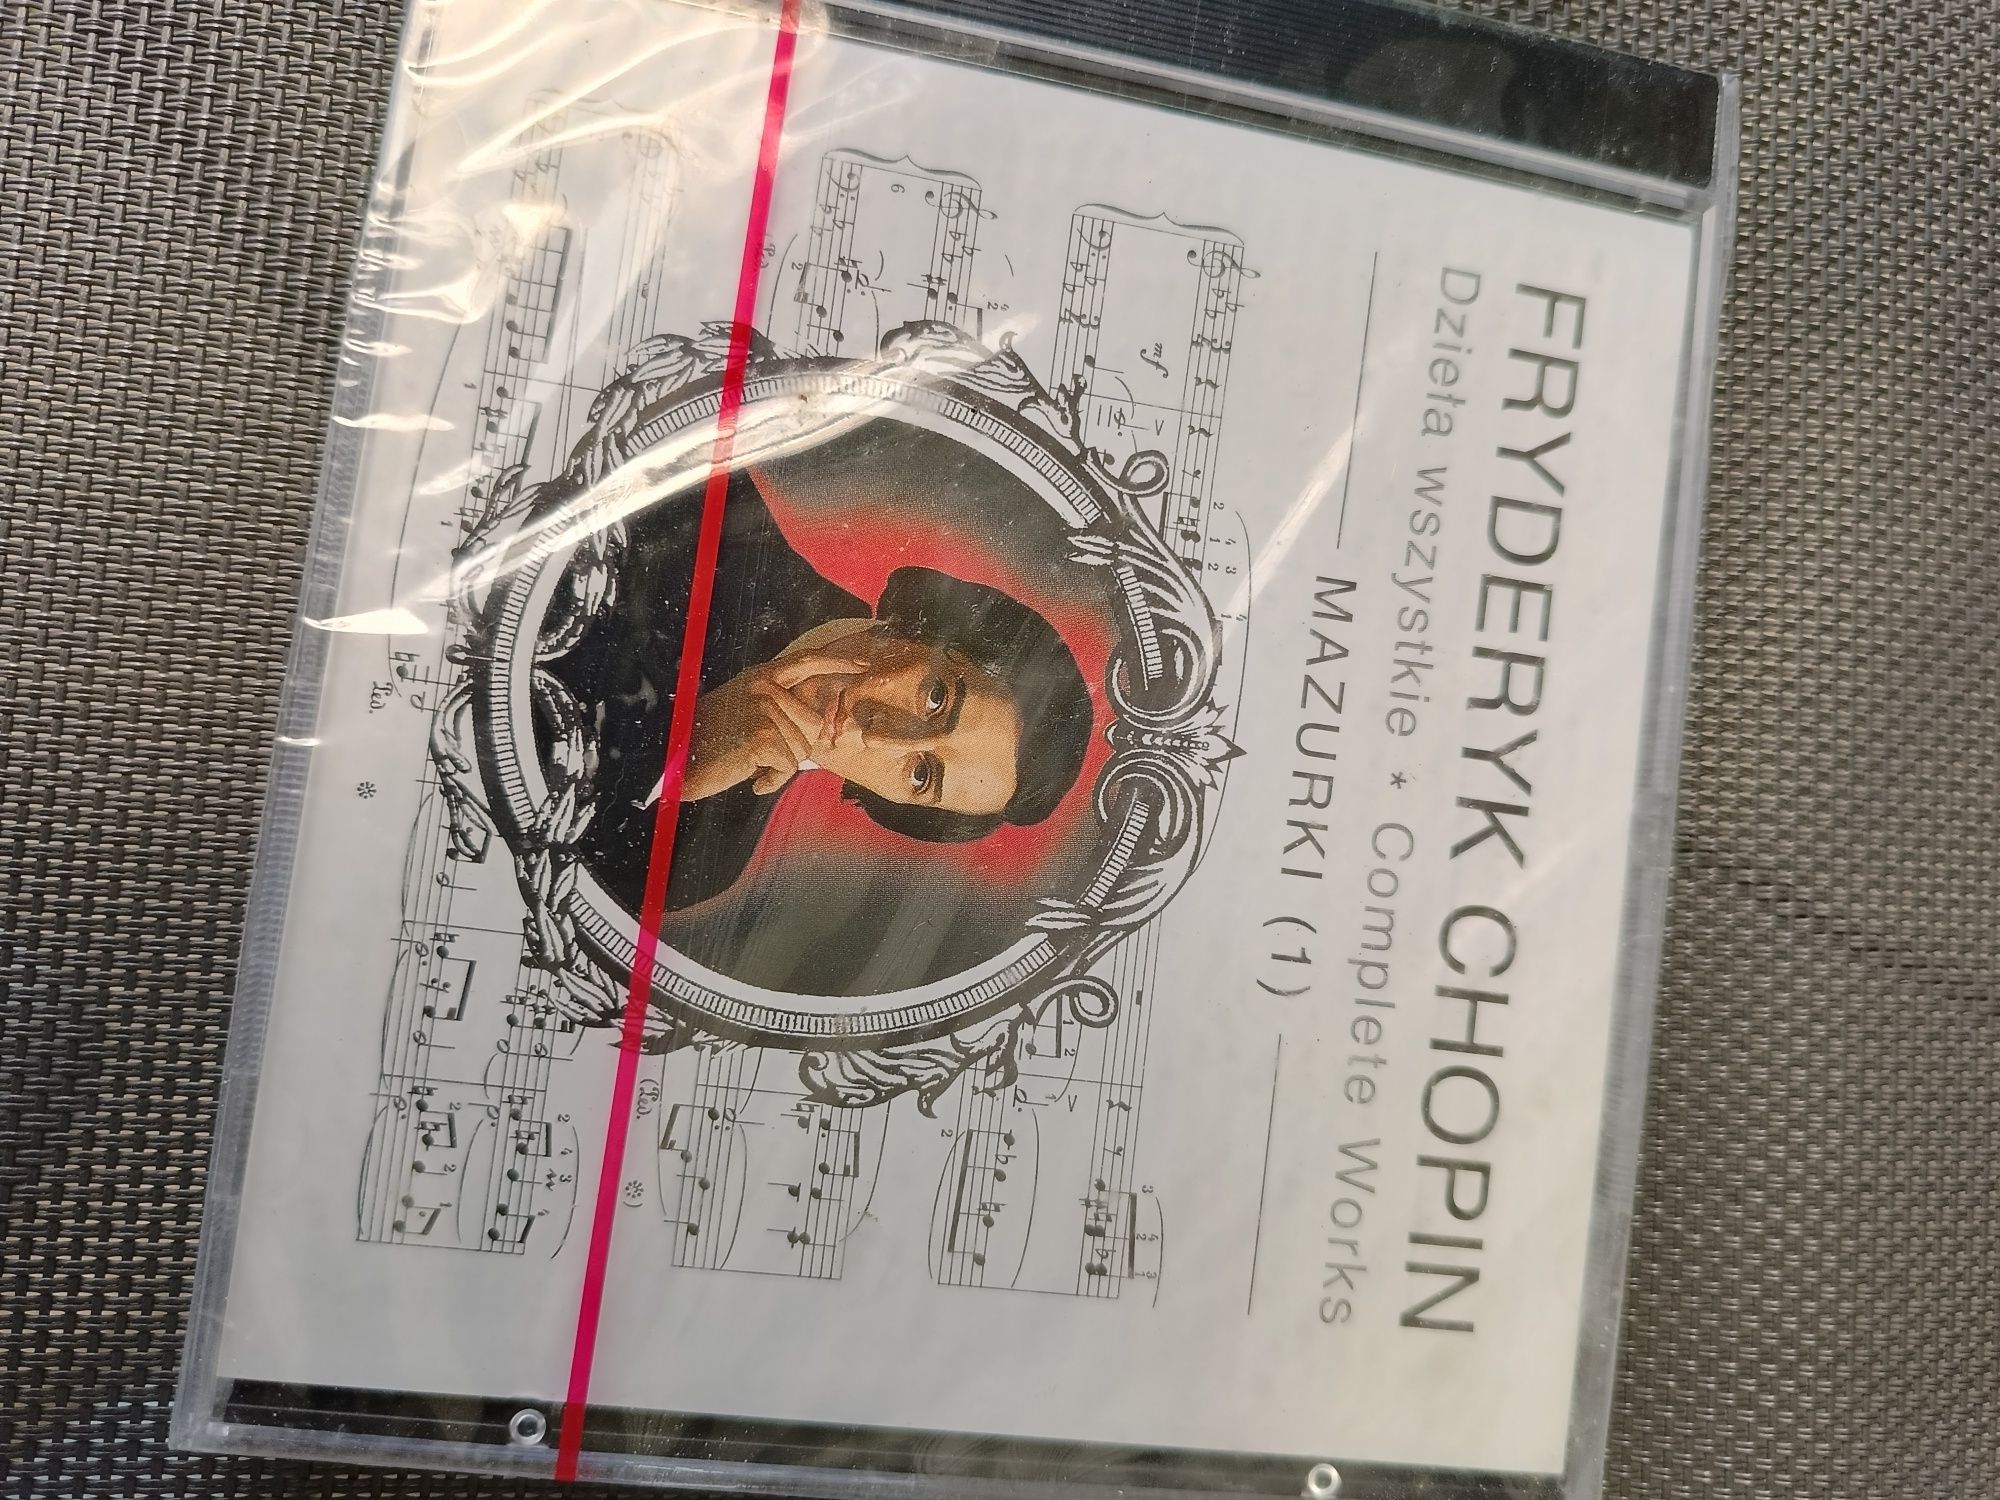 Album Fryderyka Chopina z czterema płytami CD